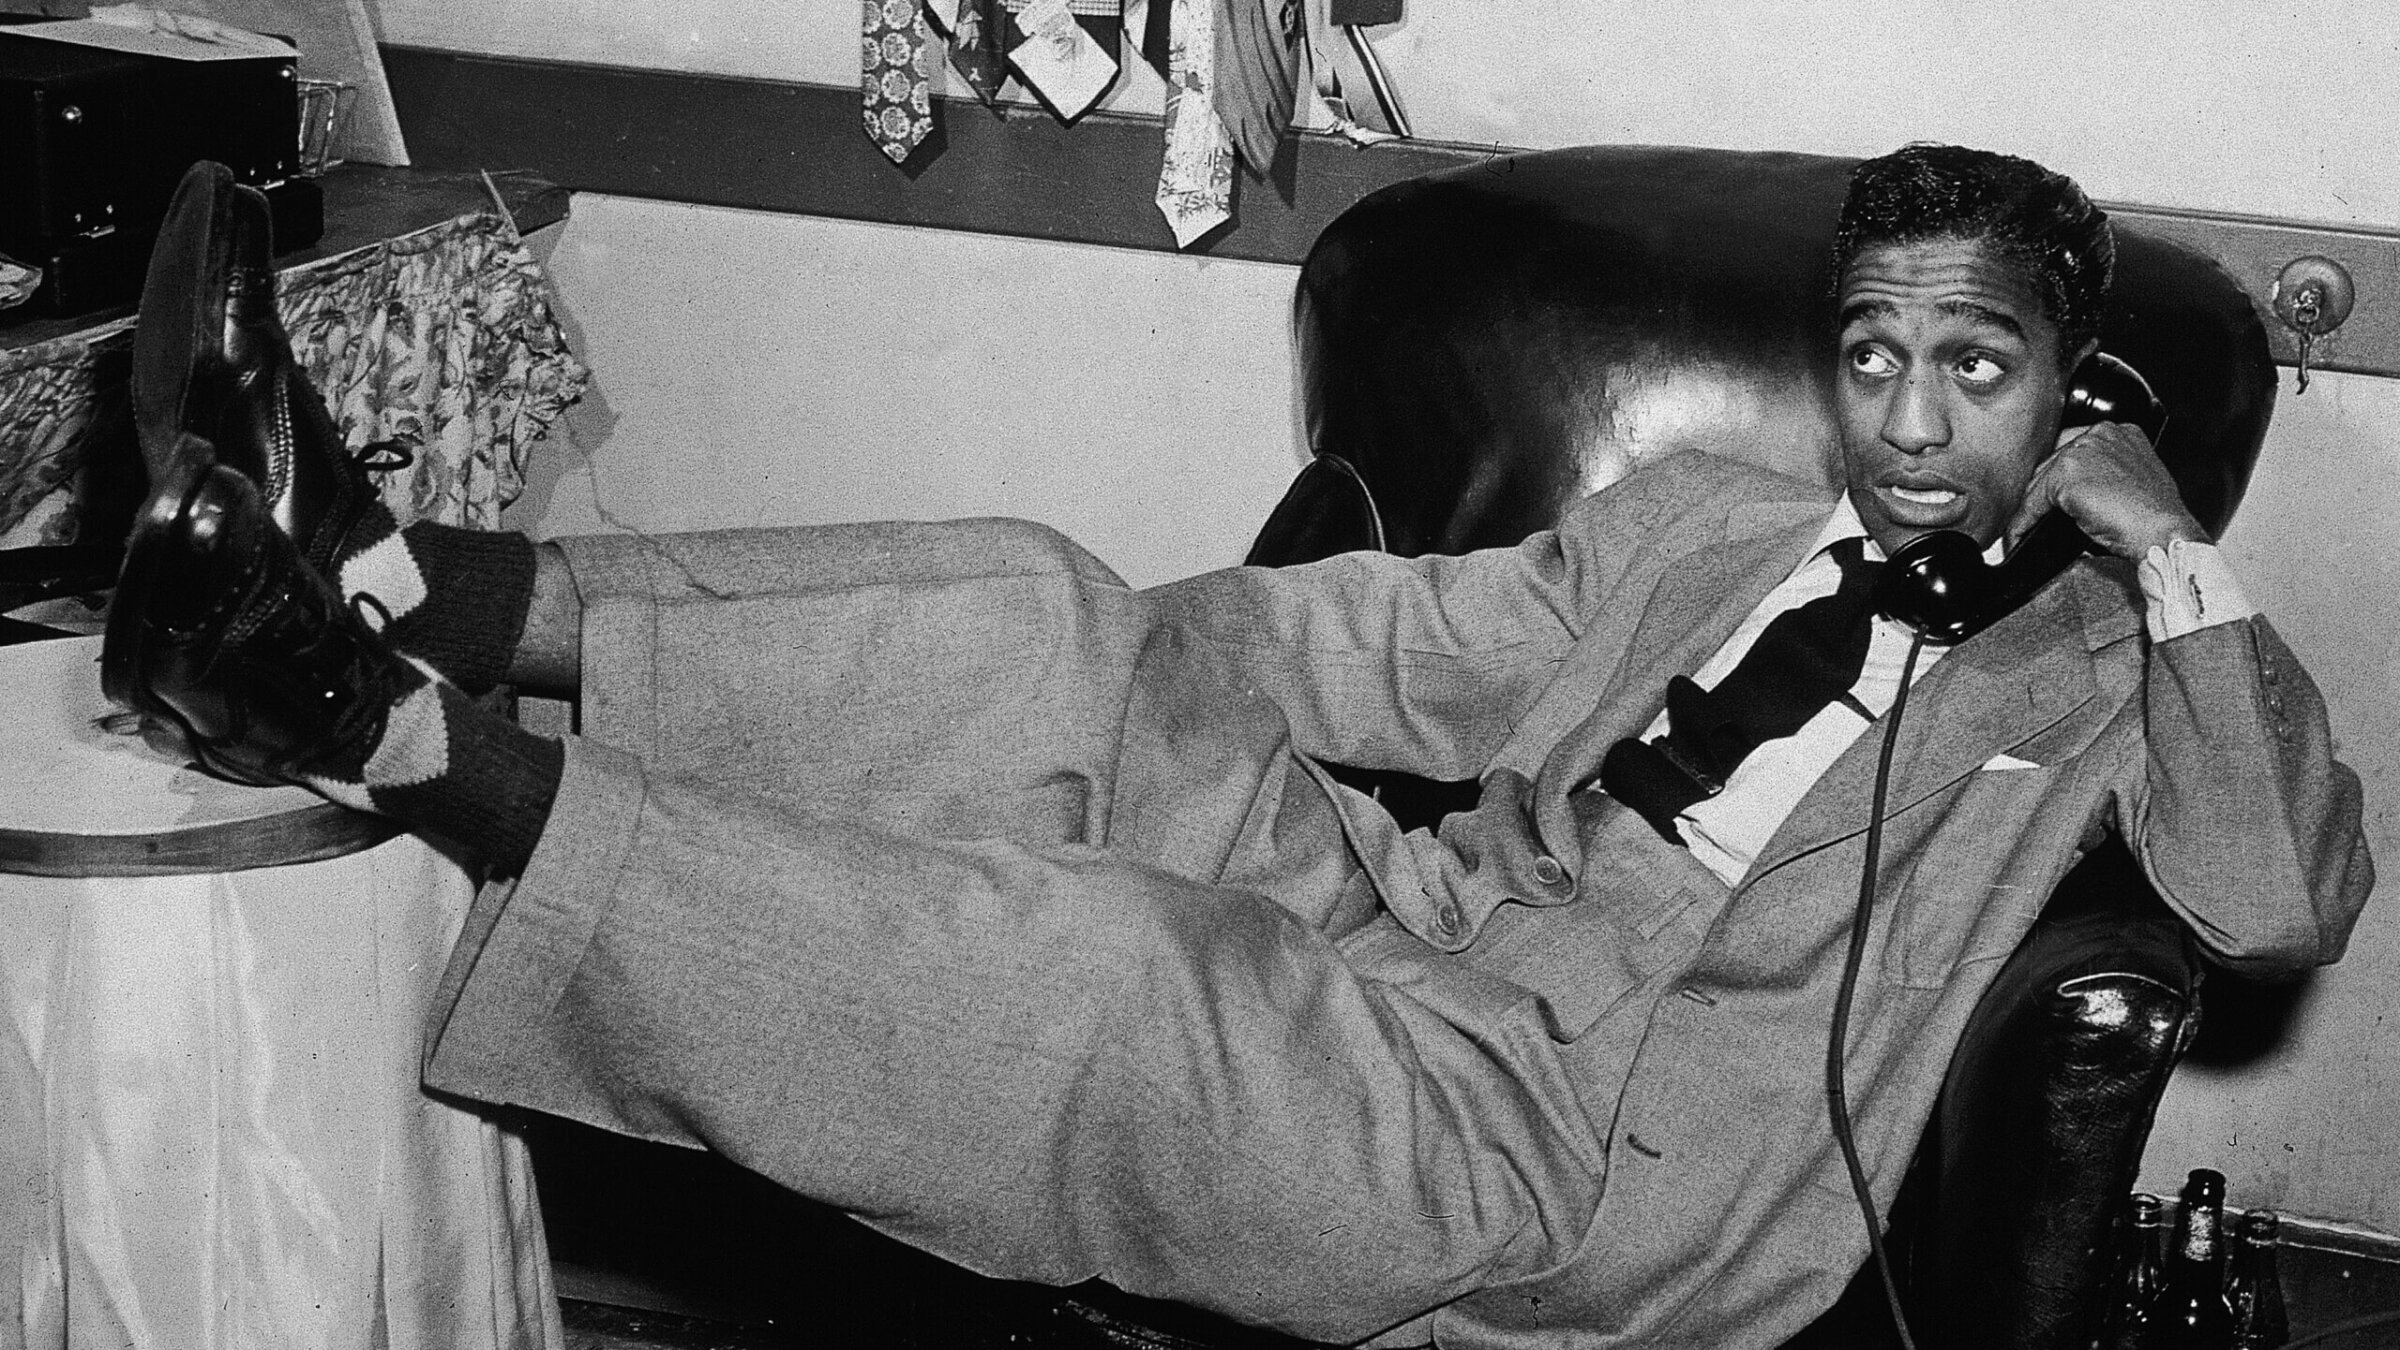 Sammy Davis Jr on the phone, circa 1955.